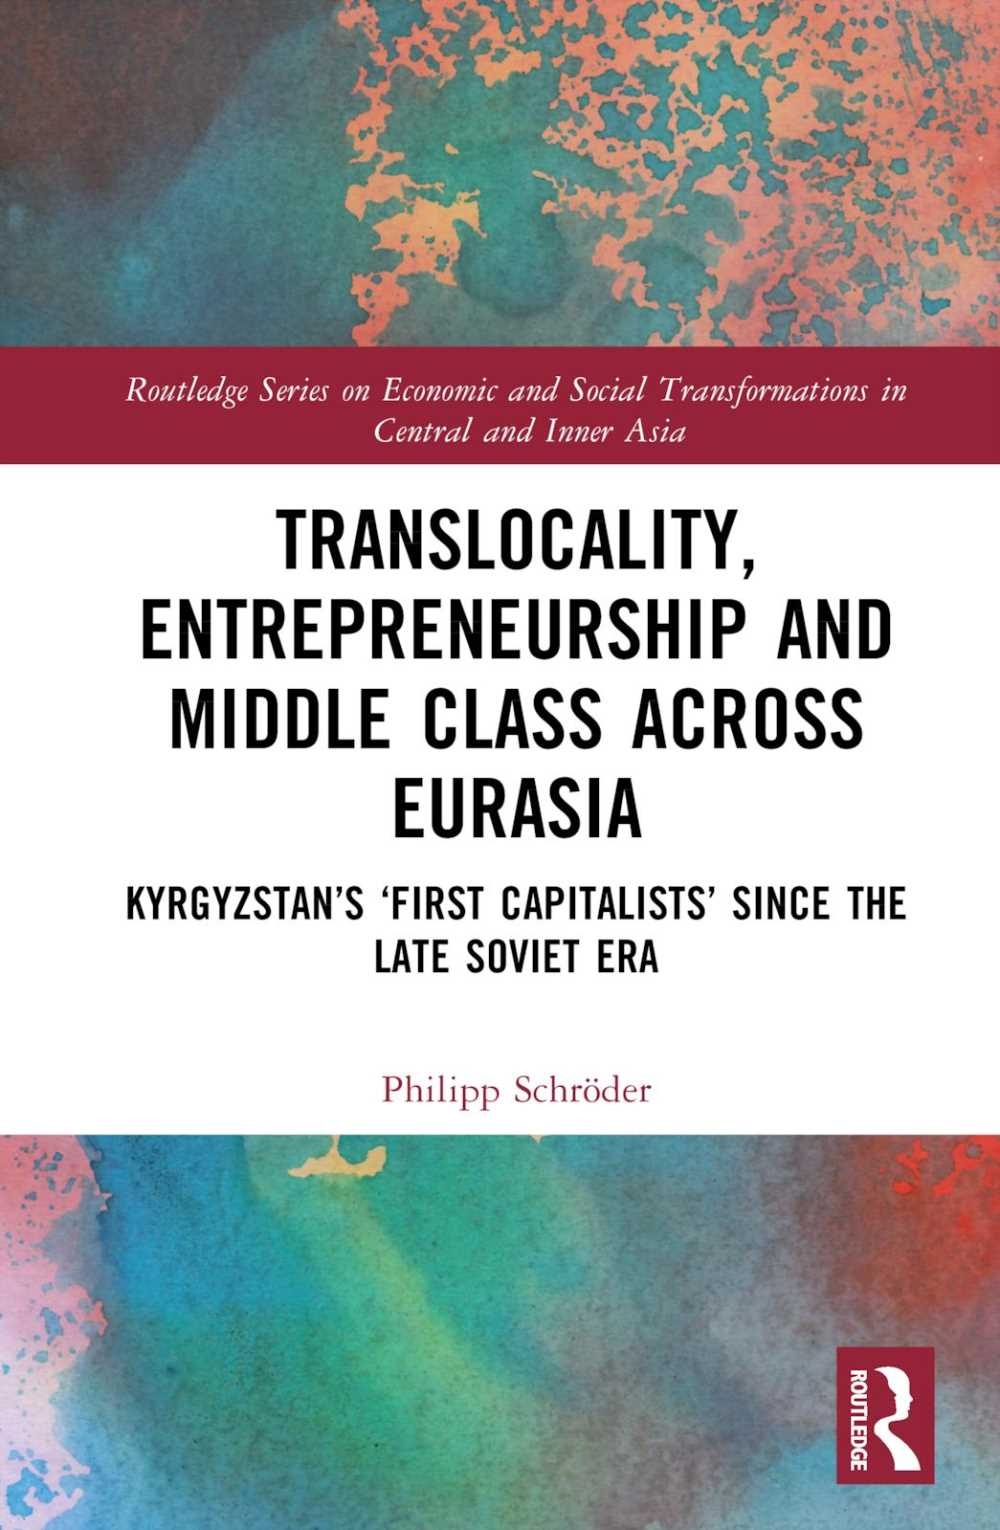 Translocality, Entrepreneurship and Middle Class Across Eurasia: Kyrgyzstan’s First Capitalists